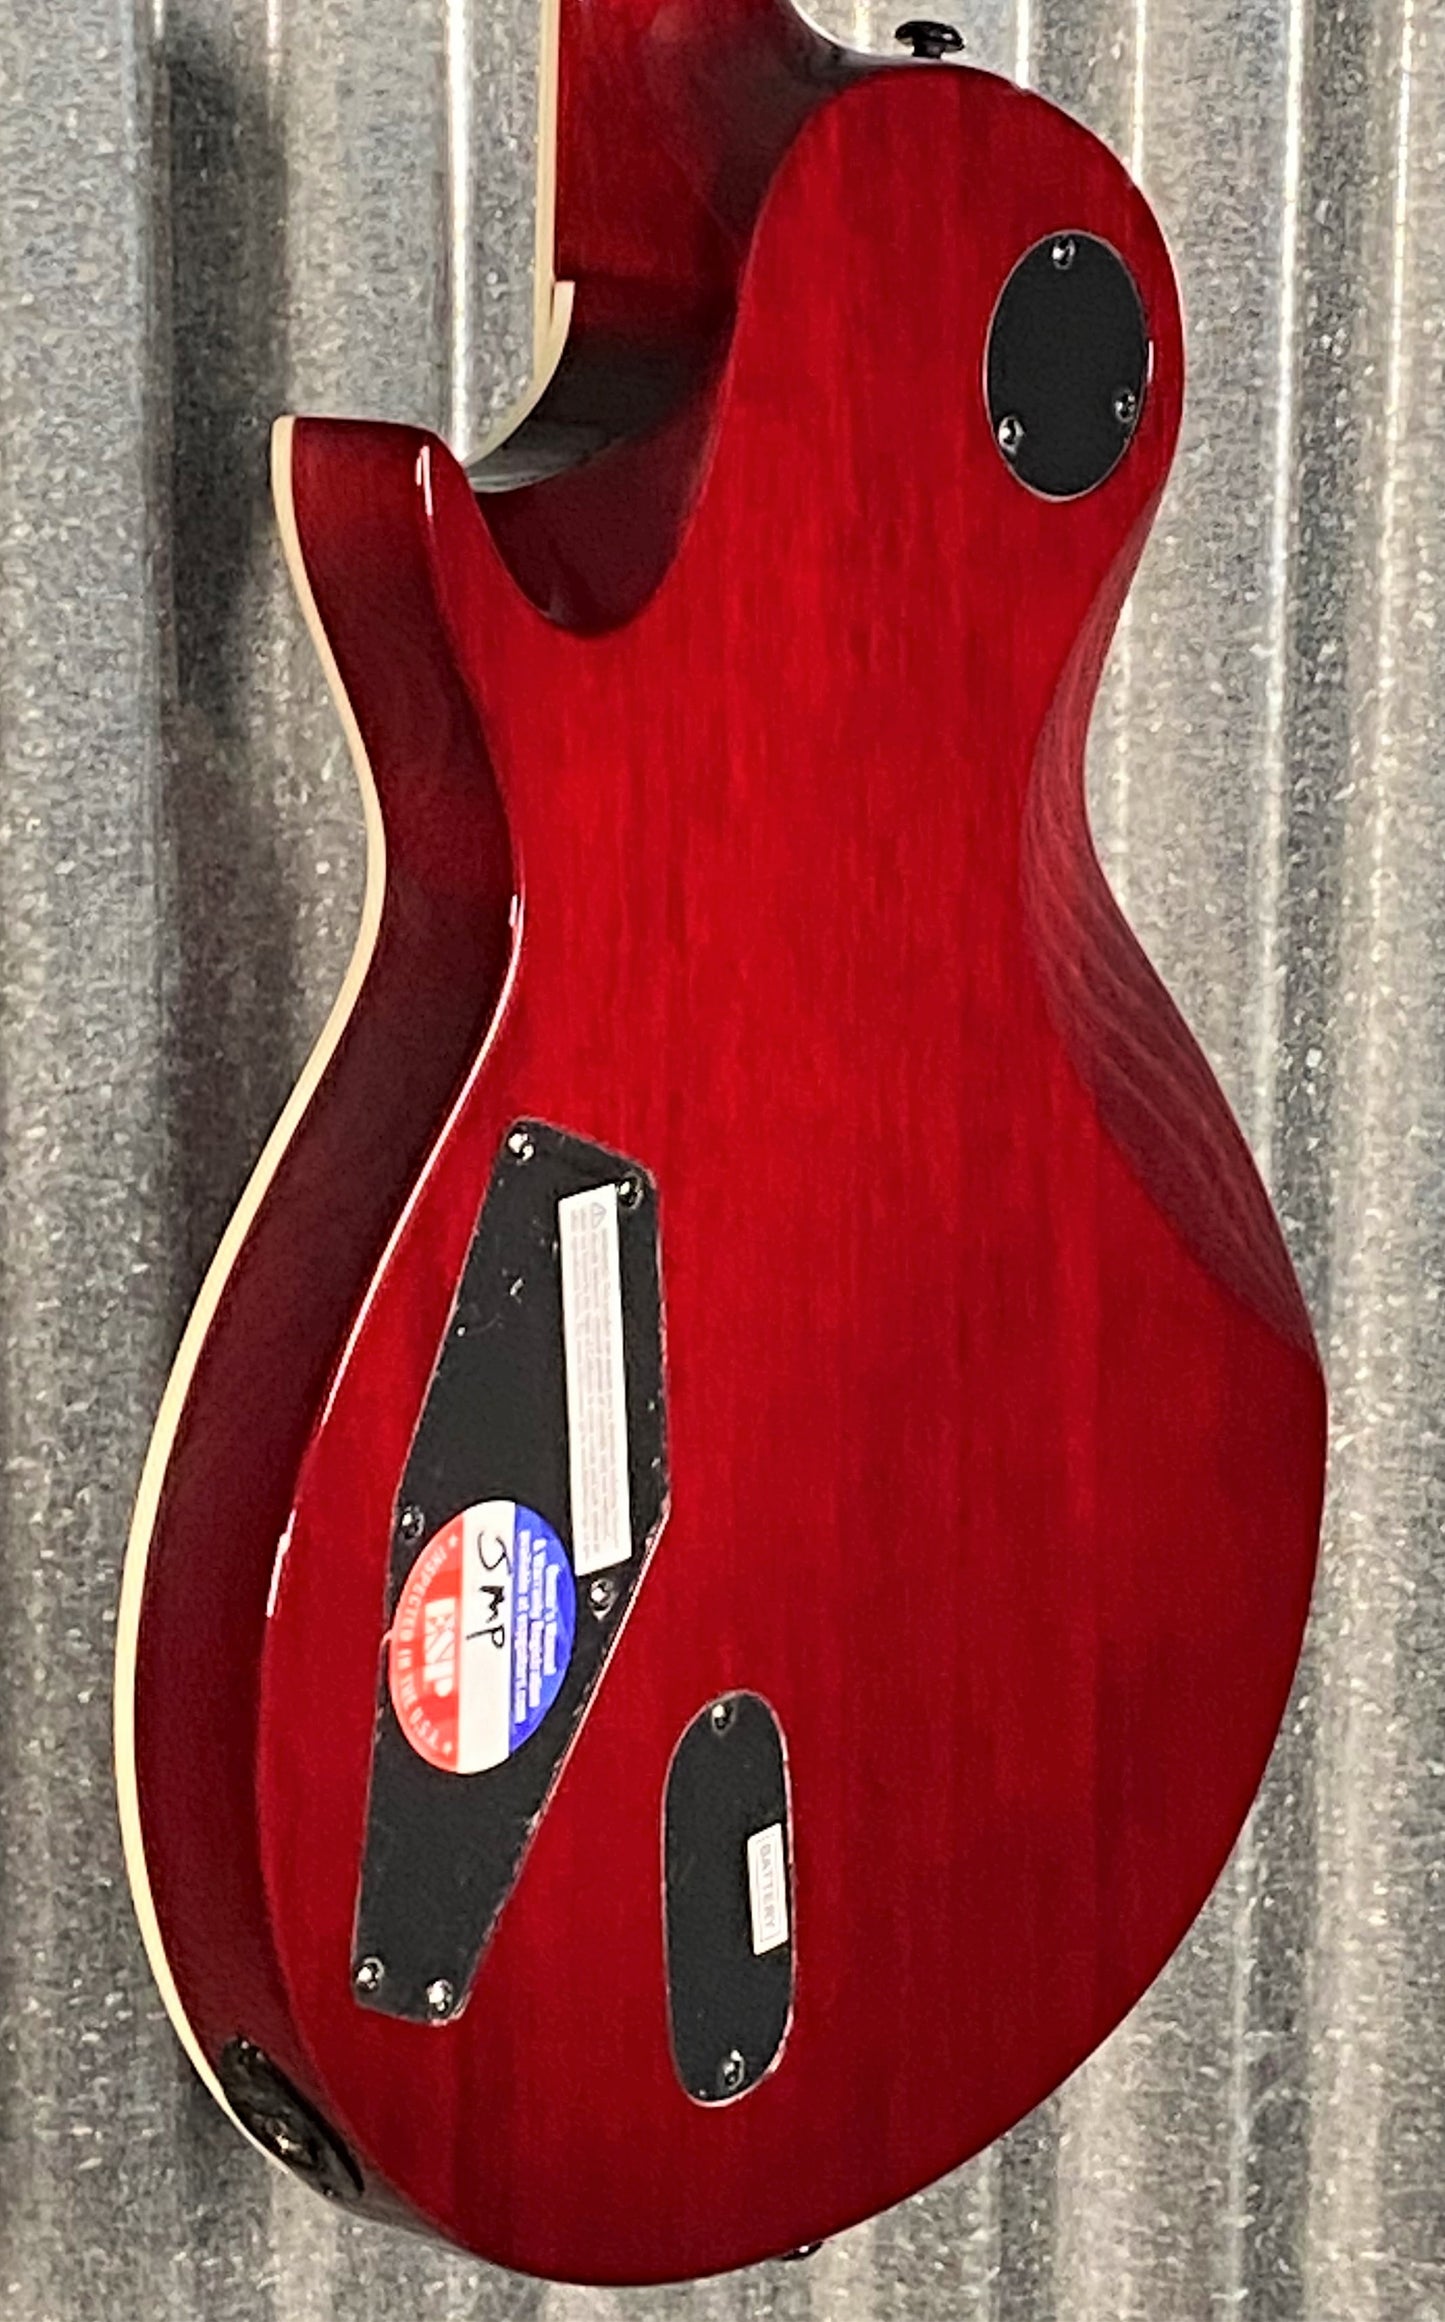 ESP LTD EC-1000 See Thru Black Cherry Guitar #0652